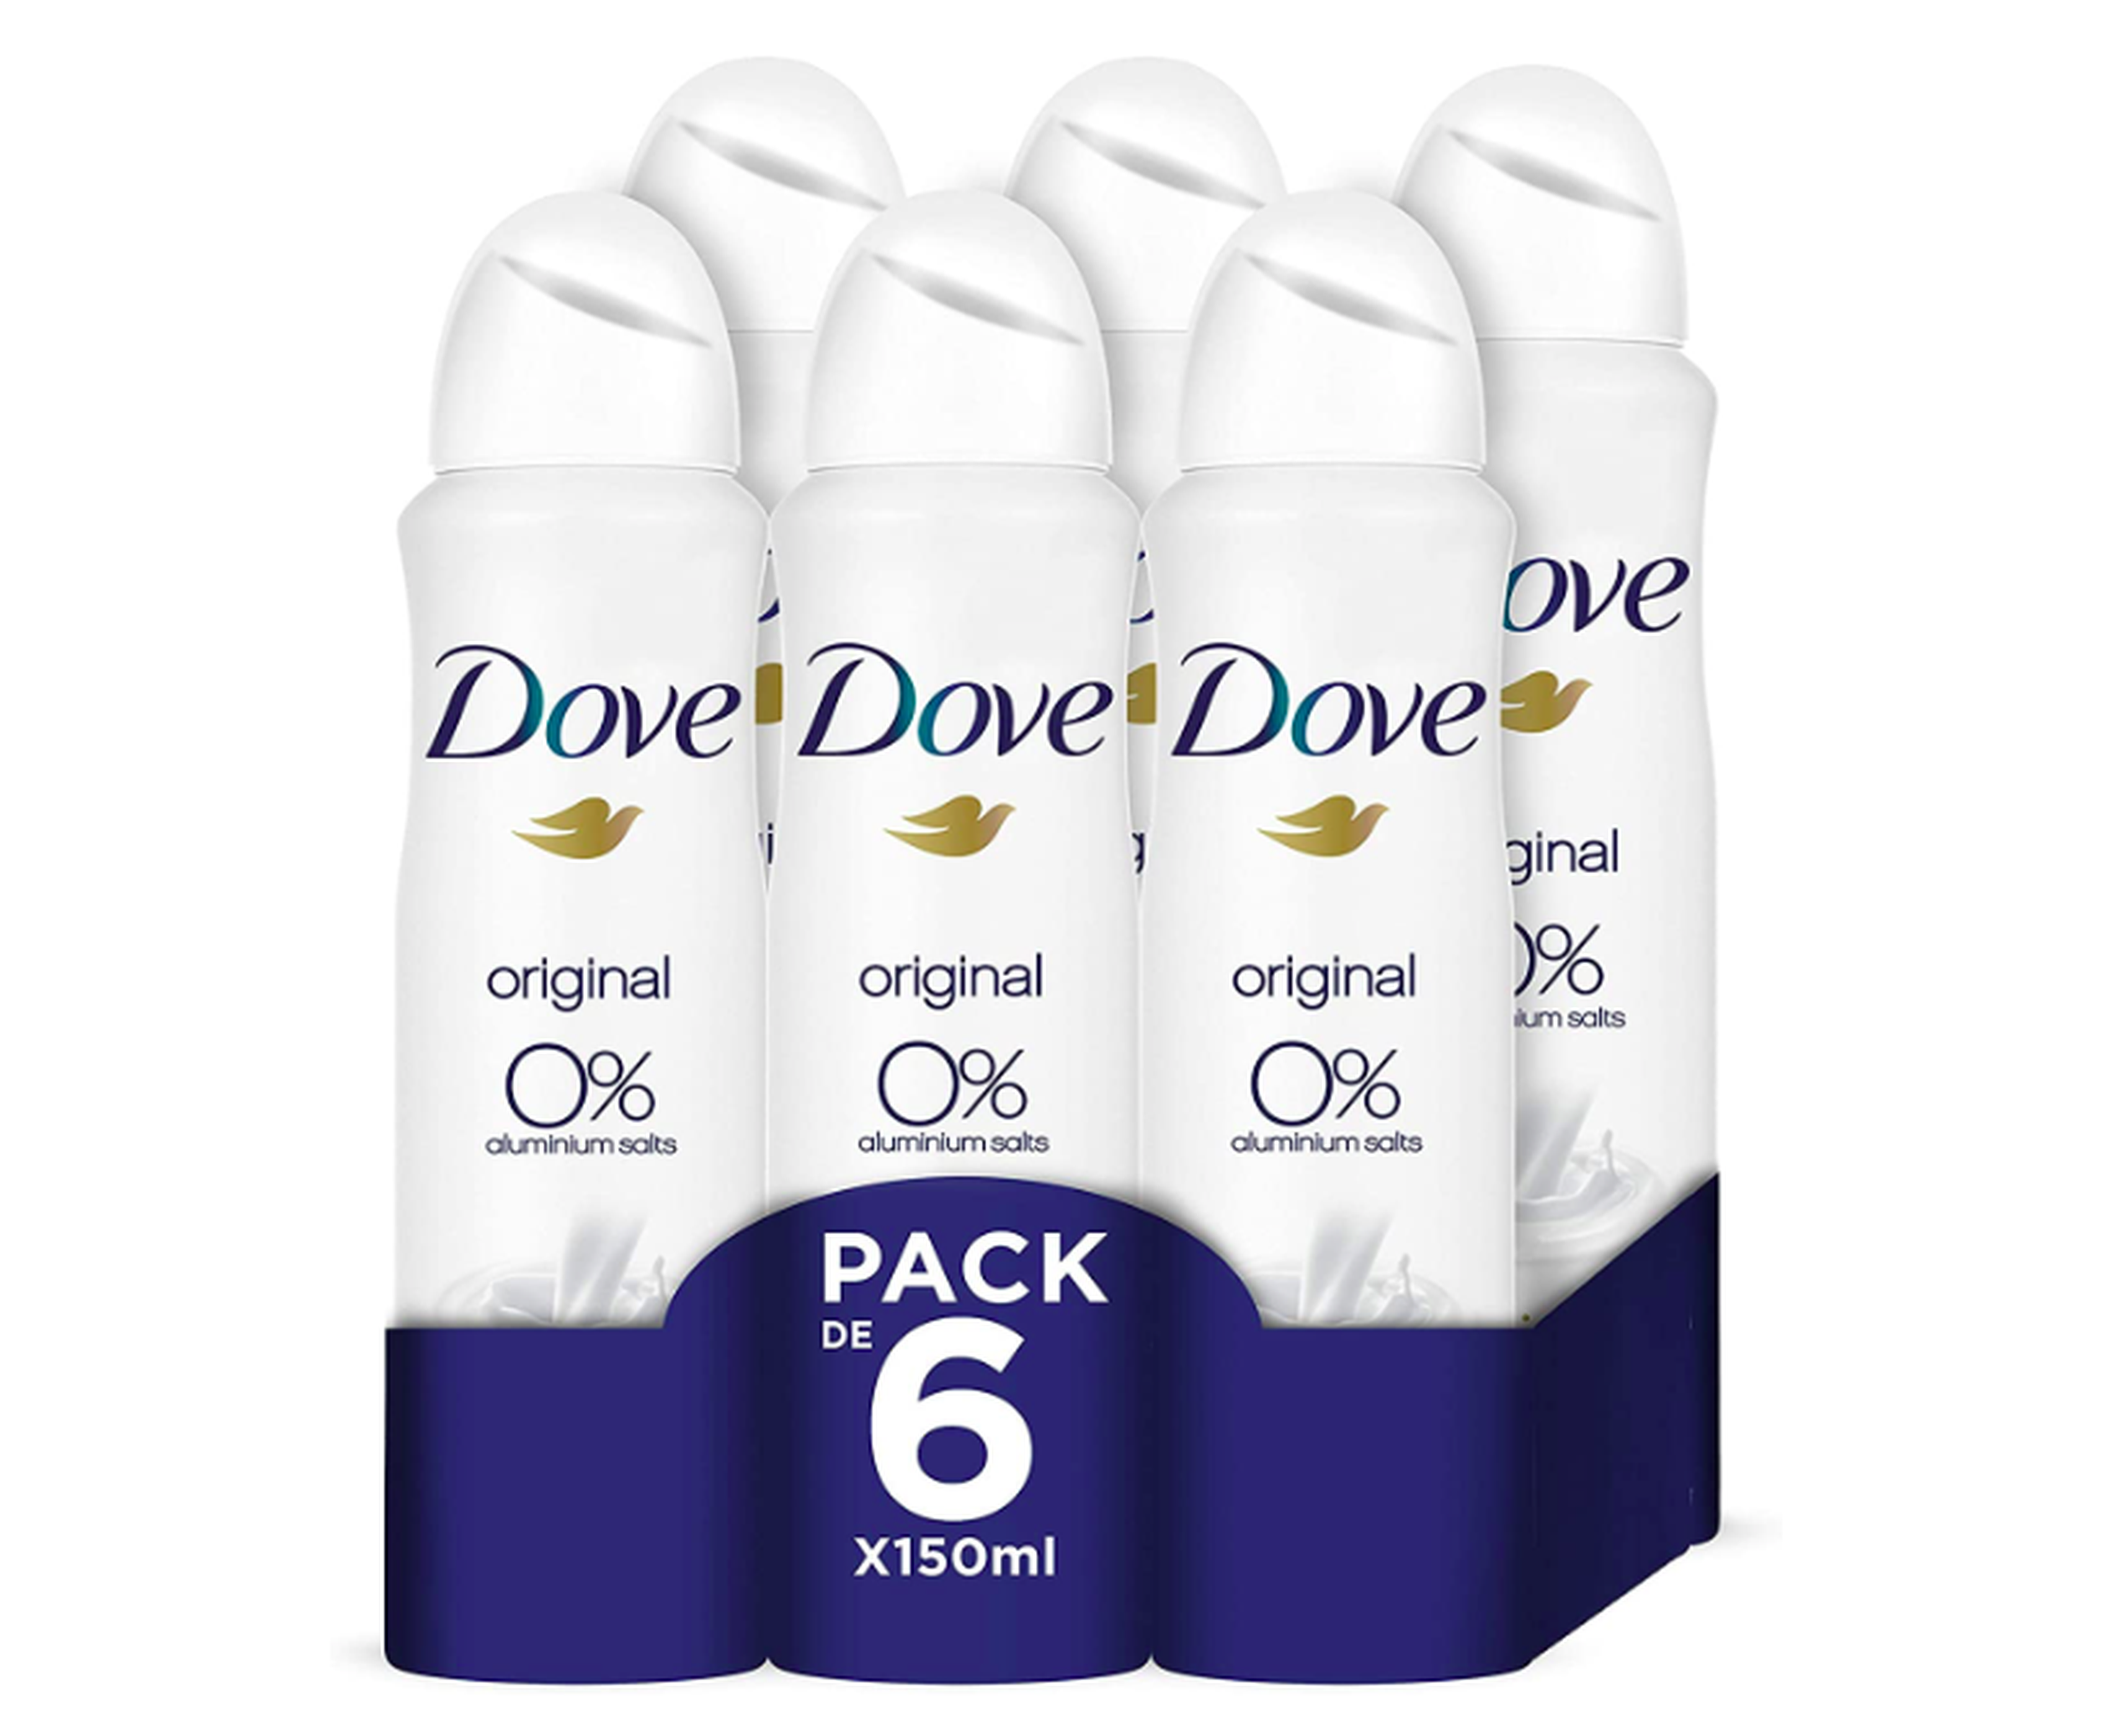 Dove Original Desodorante, 0% aluminio - pack de 6 x 150 ml - total: 900 ml.